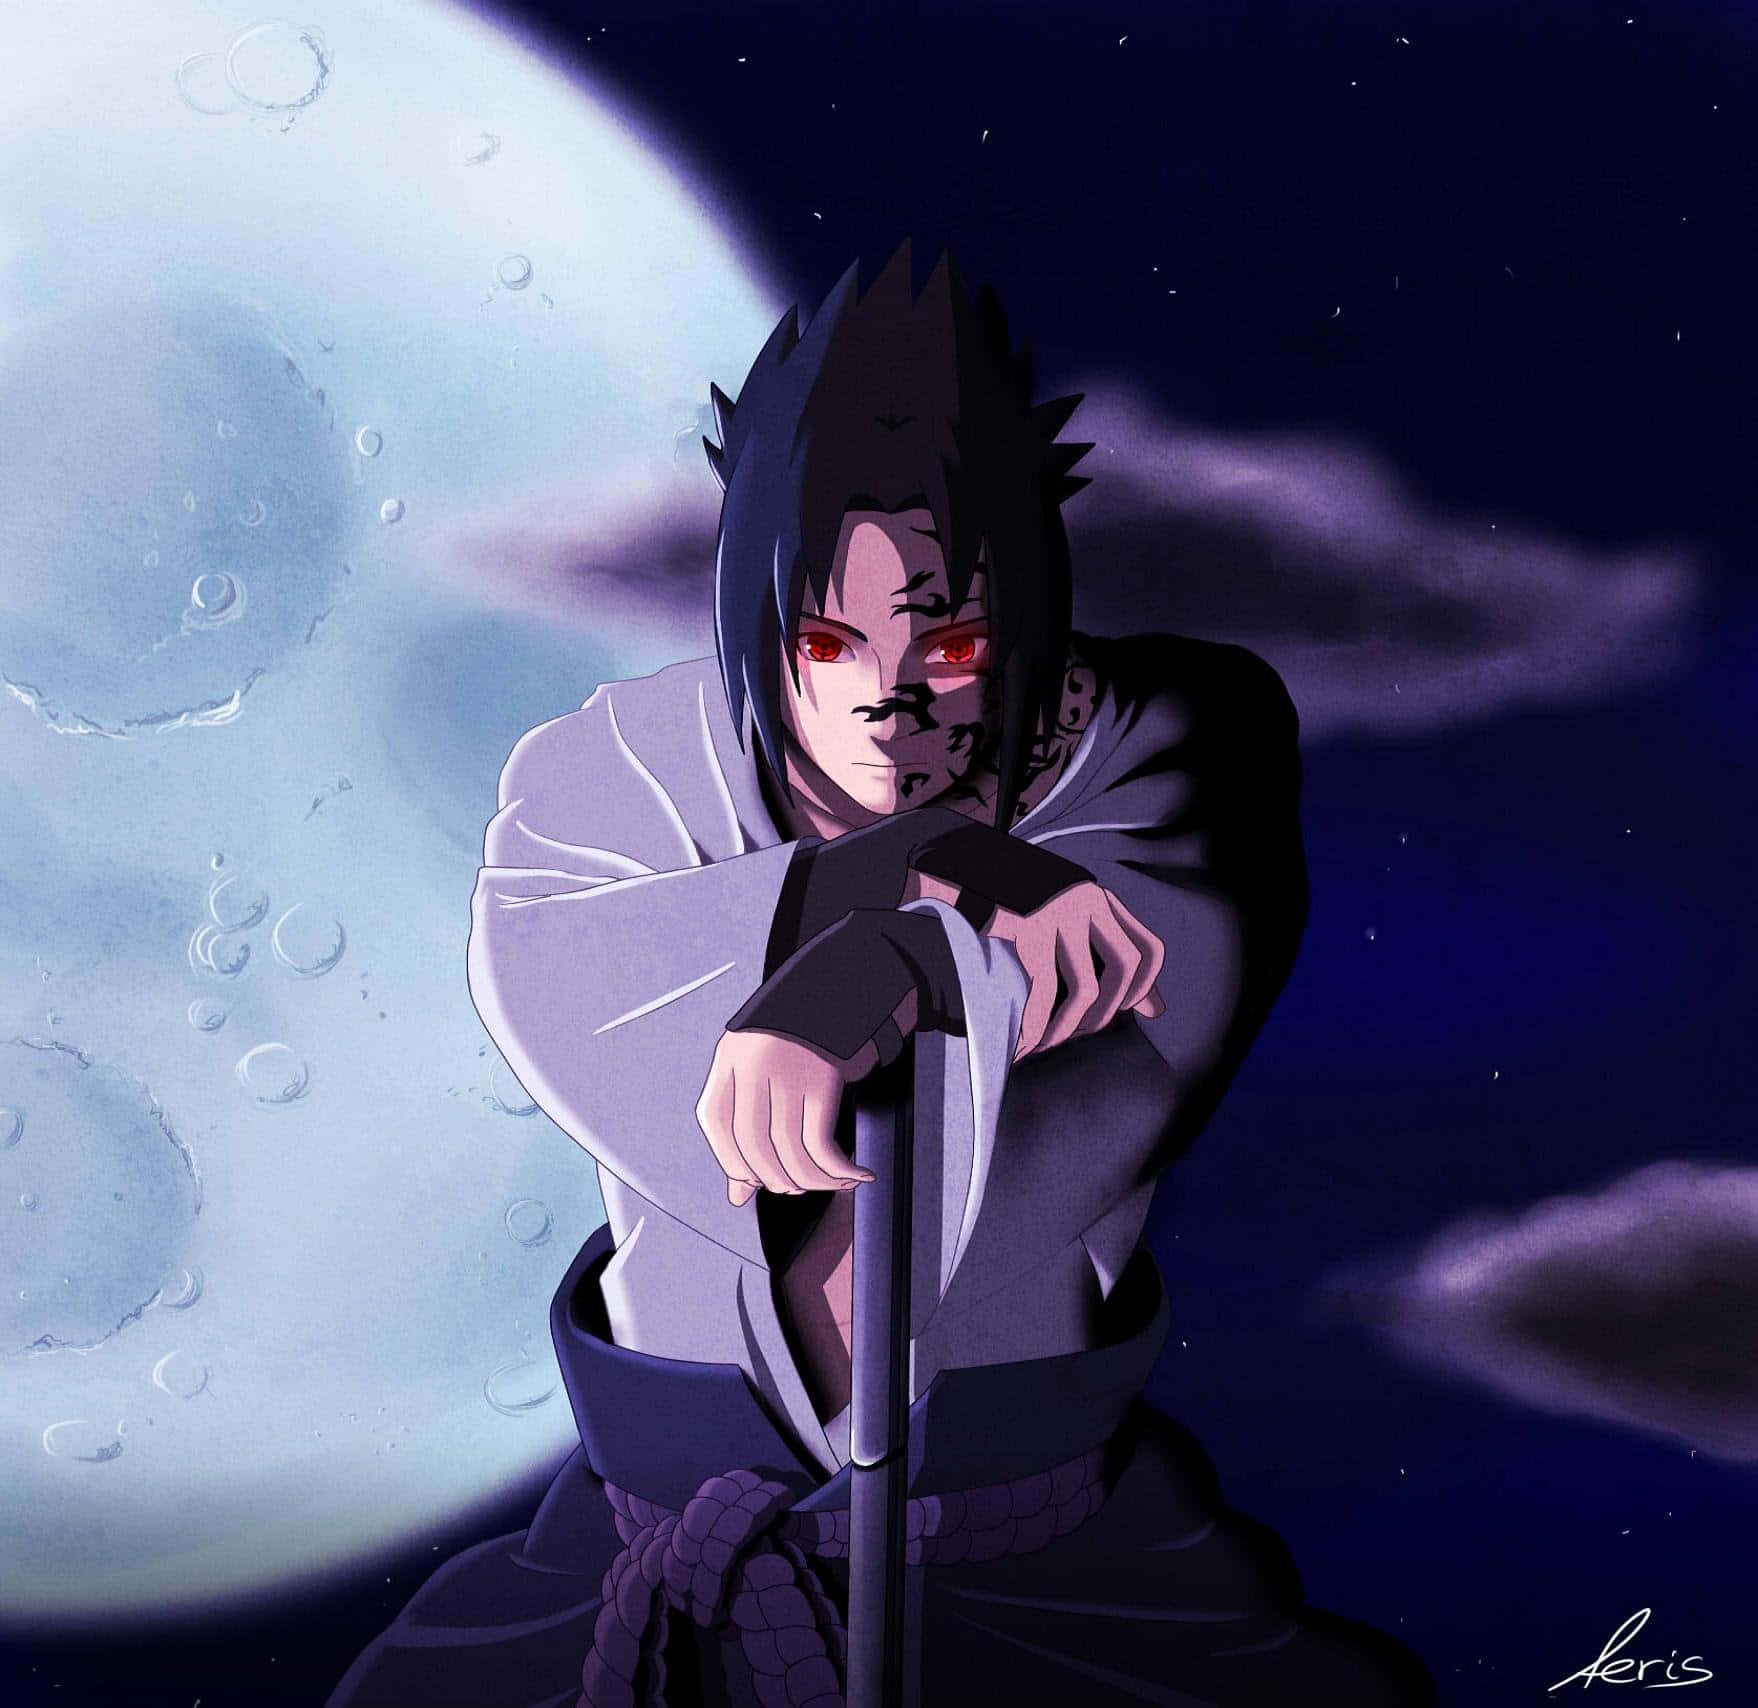 Sasuke and his iconic Sharingan eyes